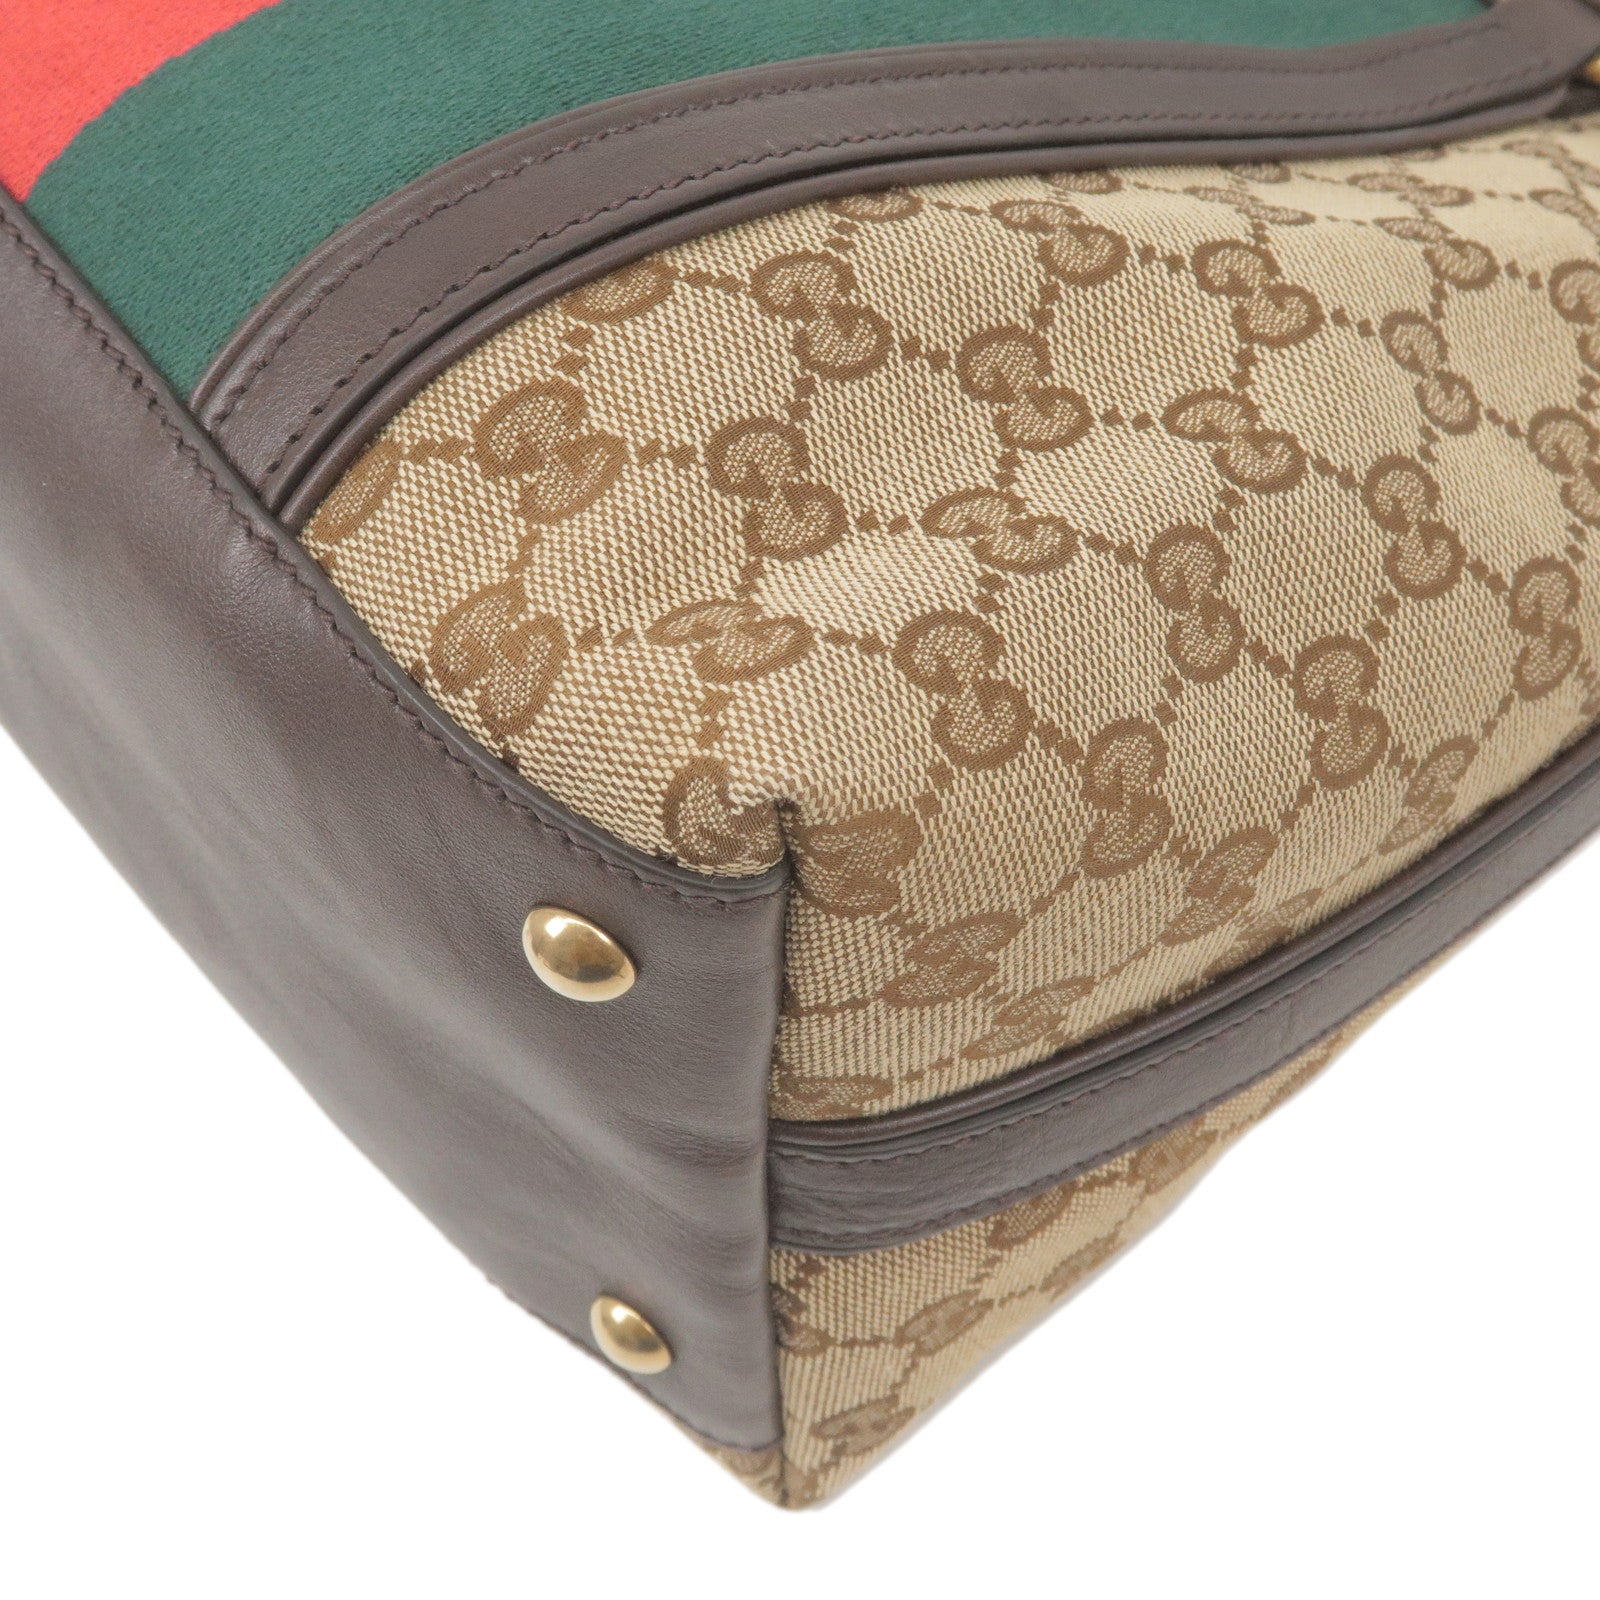 Gucci Khaki Brown/Black Canvas and Leather Large Vintage Web Shopper Tote  Gucci